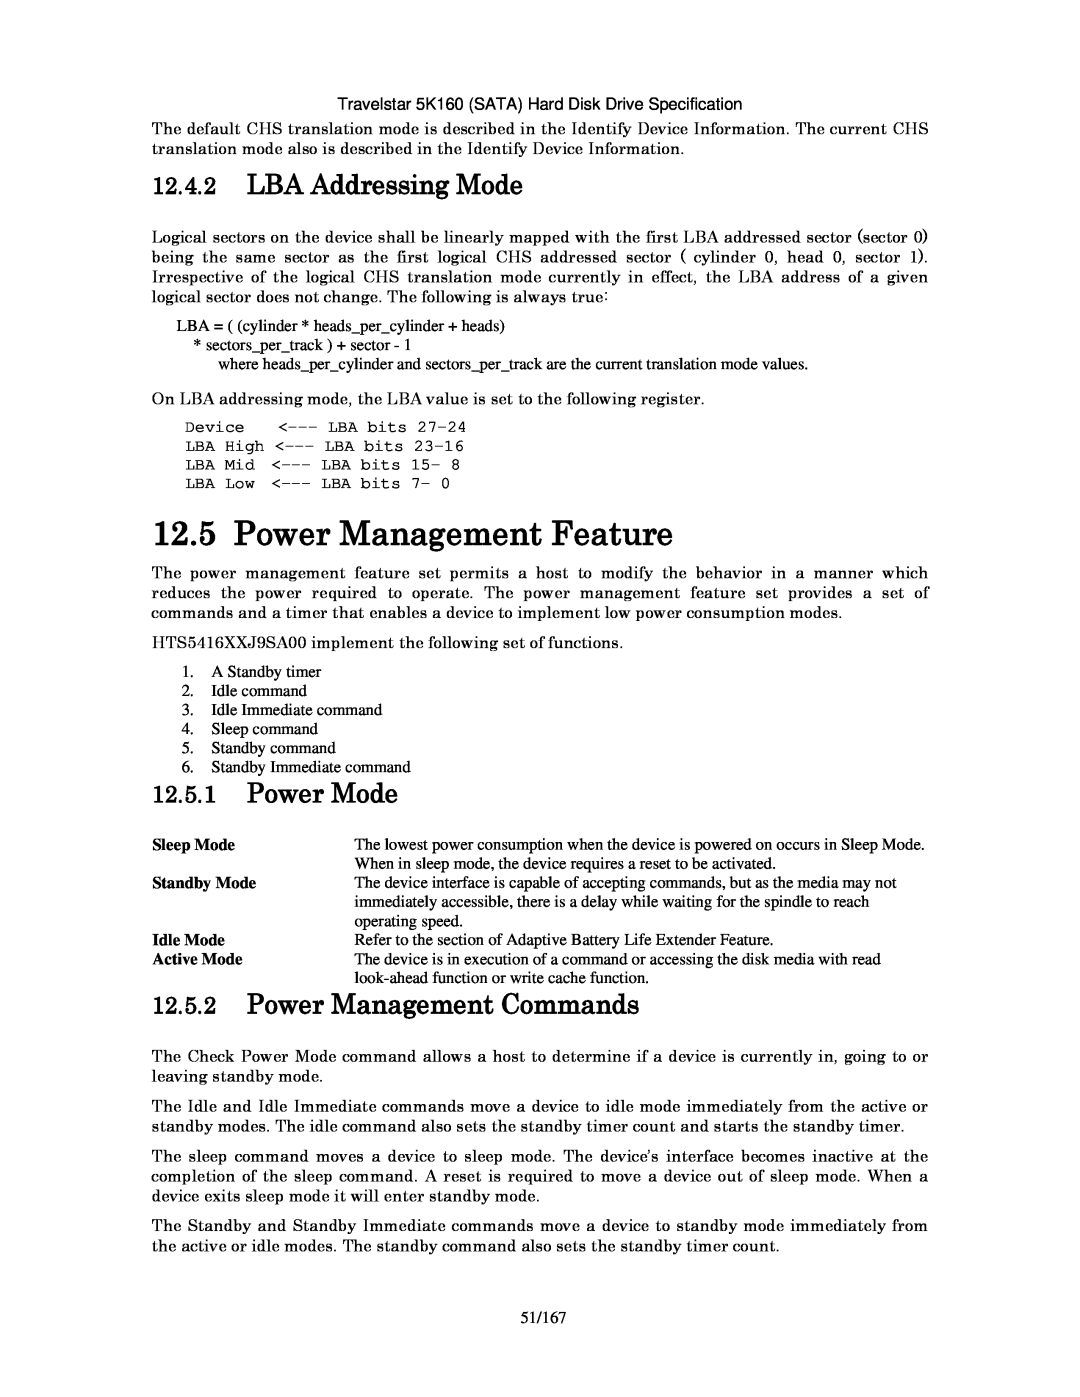 Hitachi HTS541680J9SA00 manual Power Management Feature, LBA Addressing Mode, Power Mode, Power Management Commands 